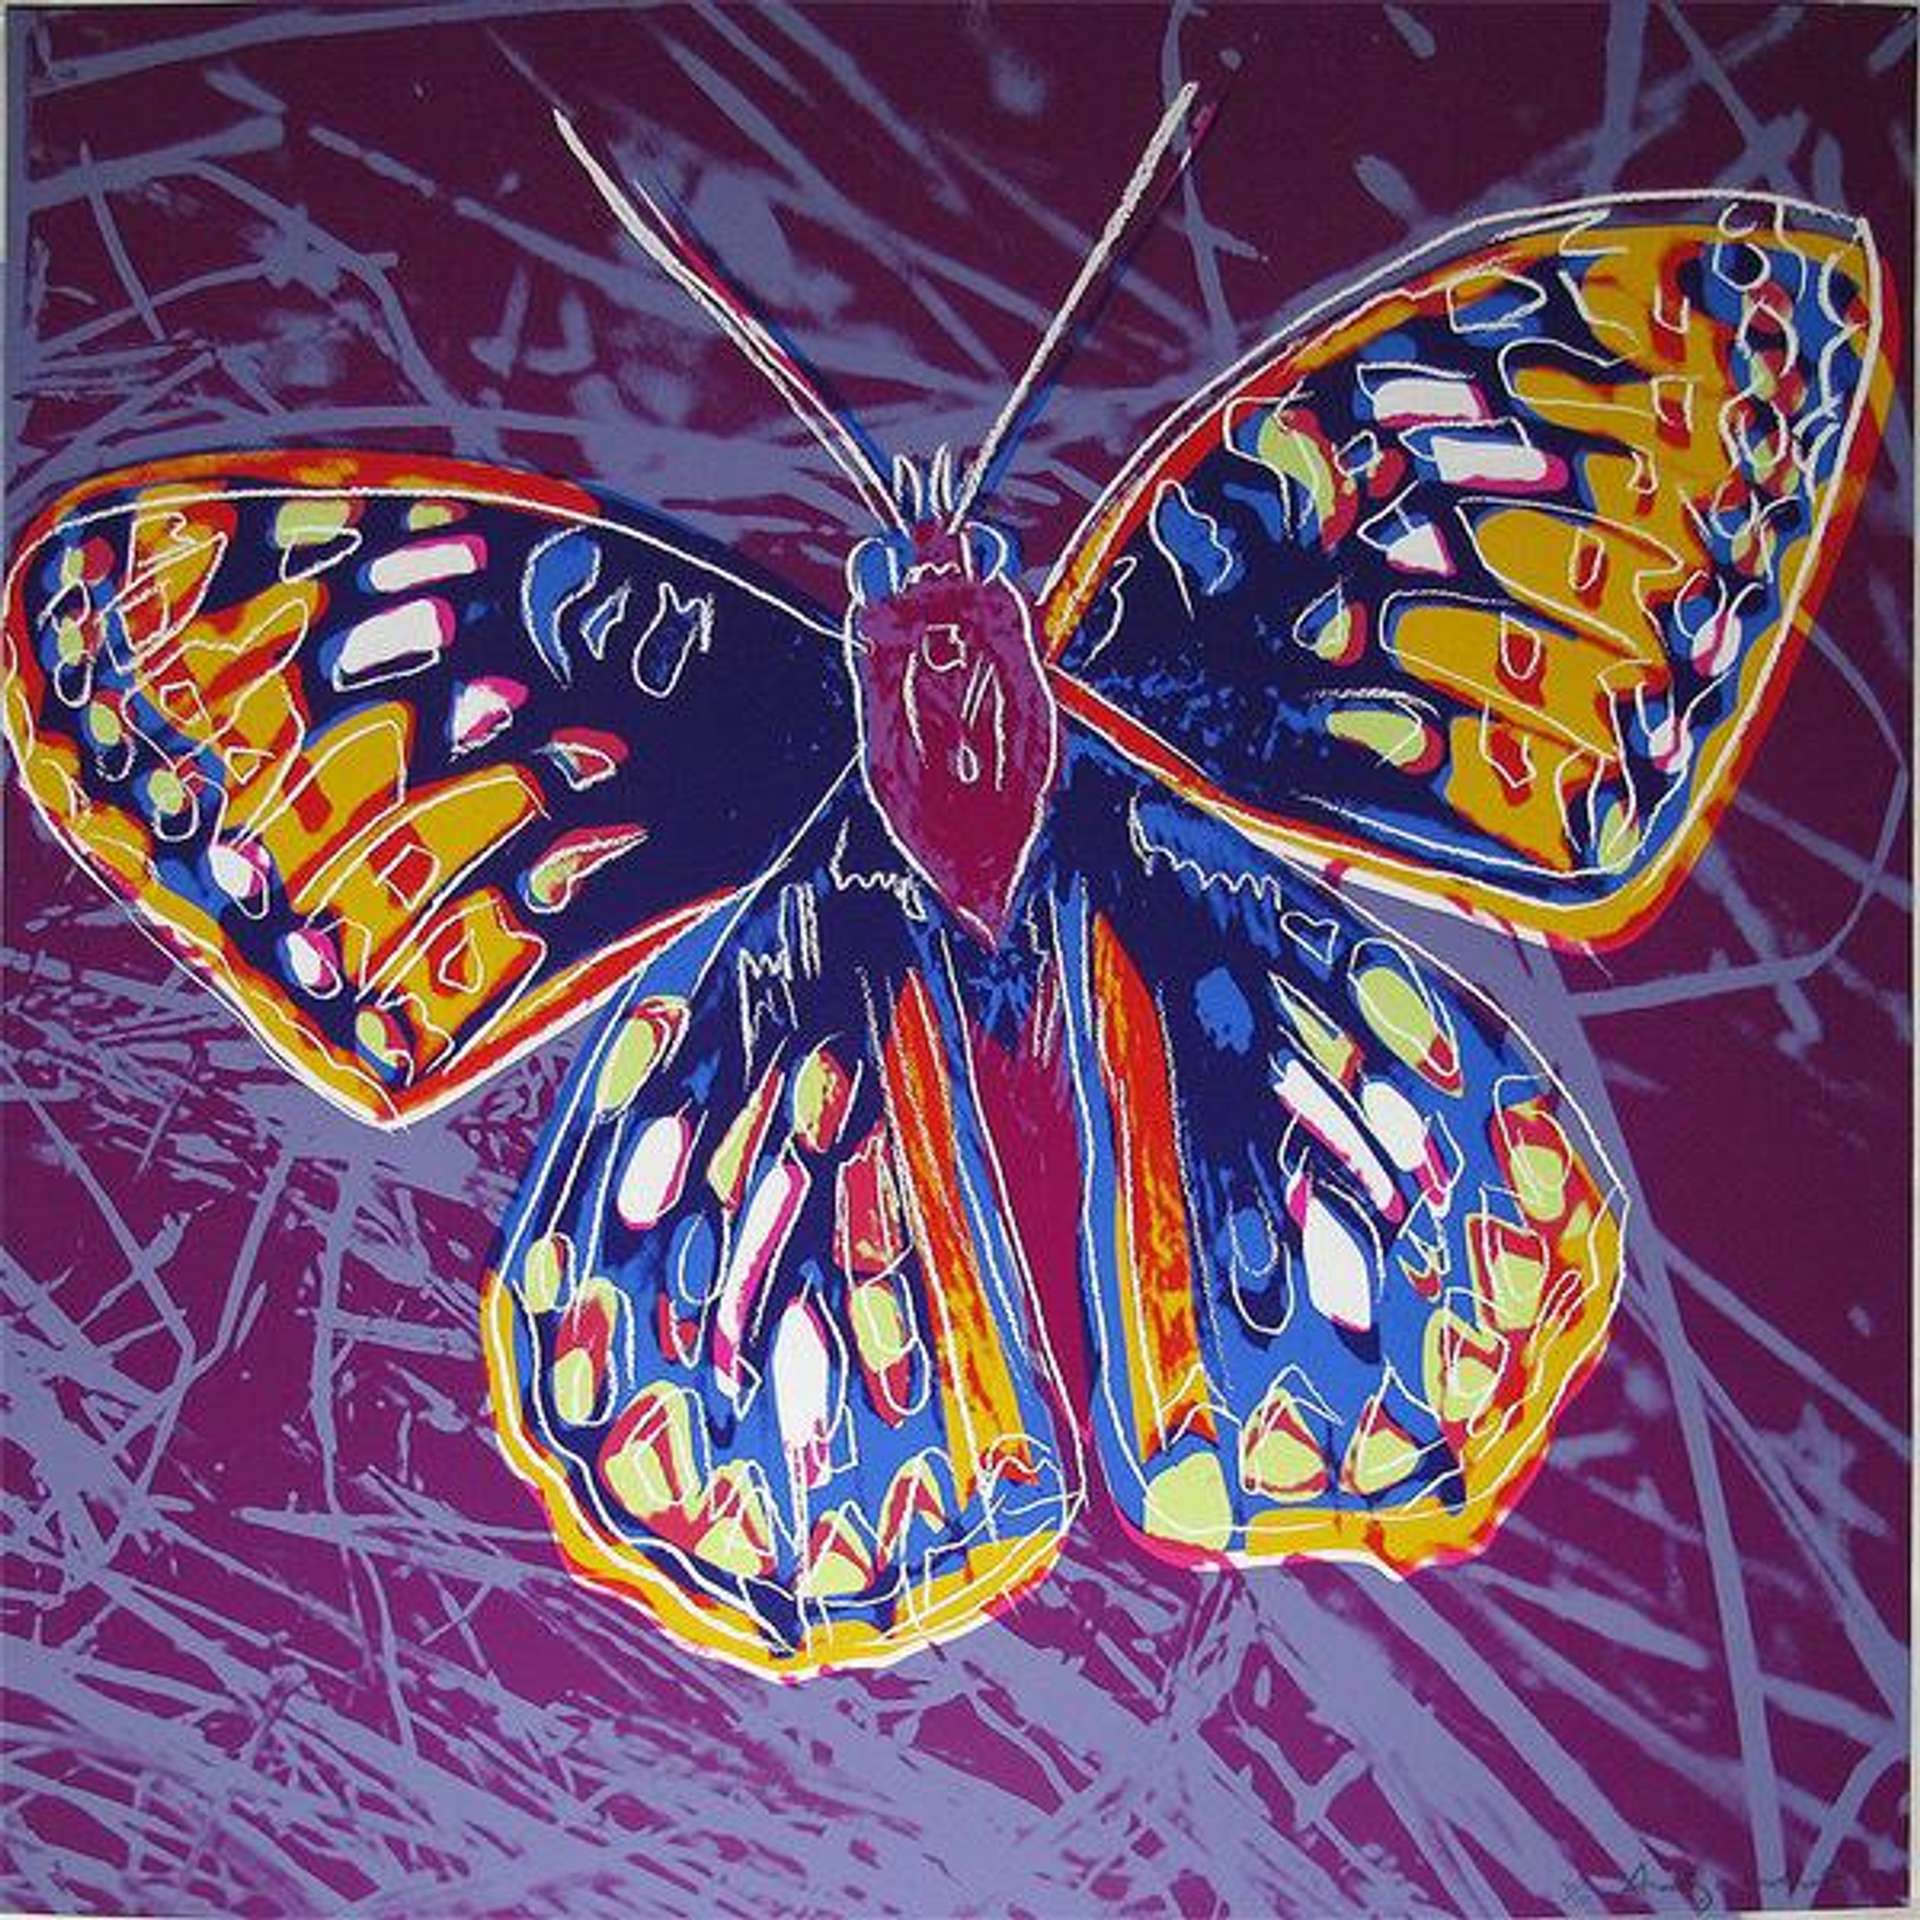 San Francisco Silverspot Butterfly (F. & S. II 298) - Signed Print by Andy Warhol 1983 - MyArtBroker